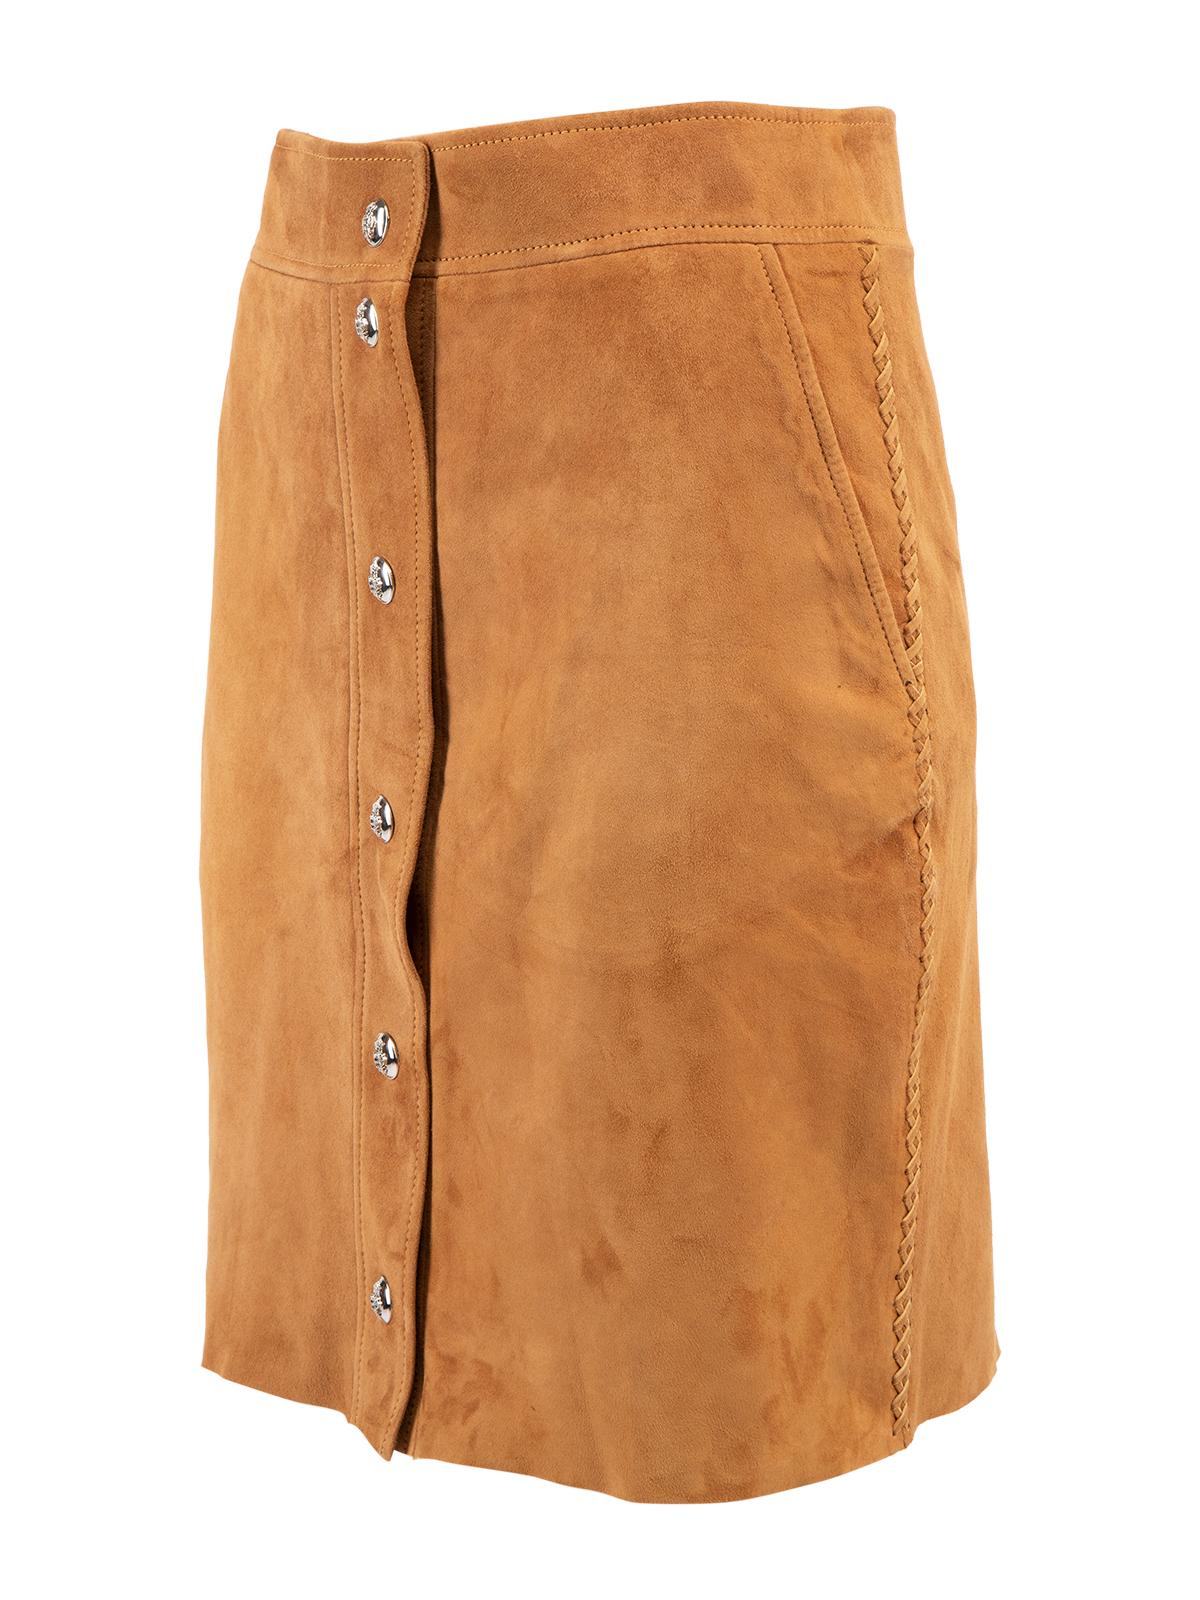 Emilio Pucci Women's Camel Suede Button Skirt 1